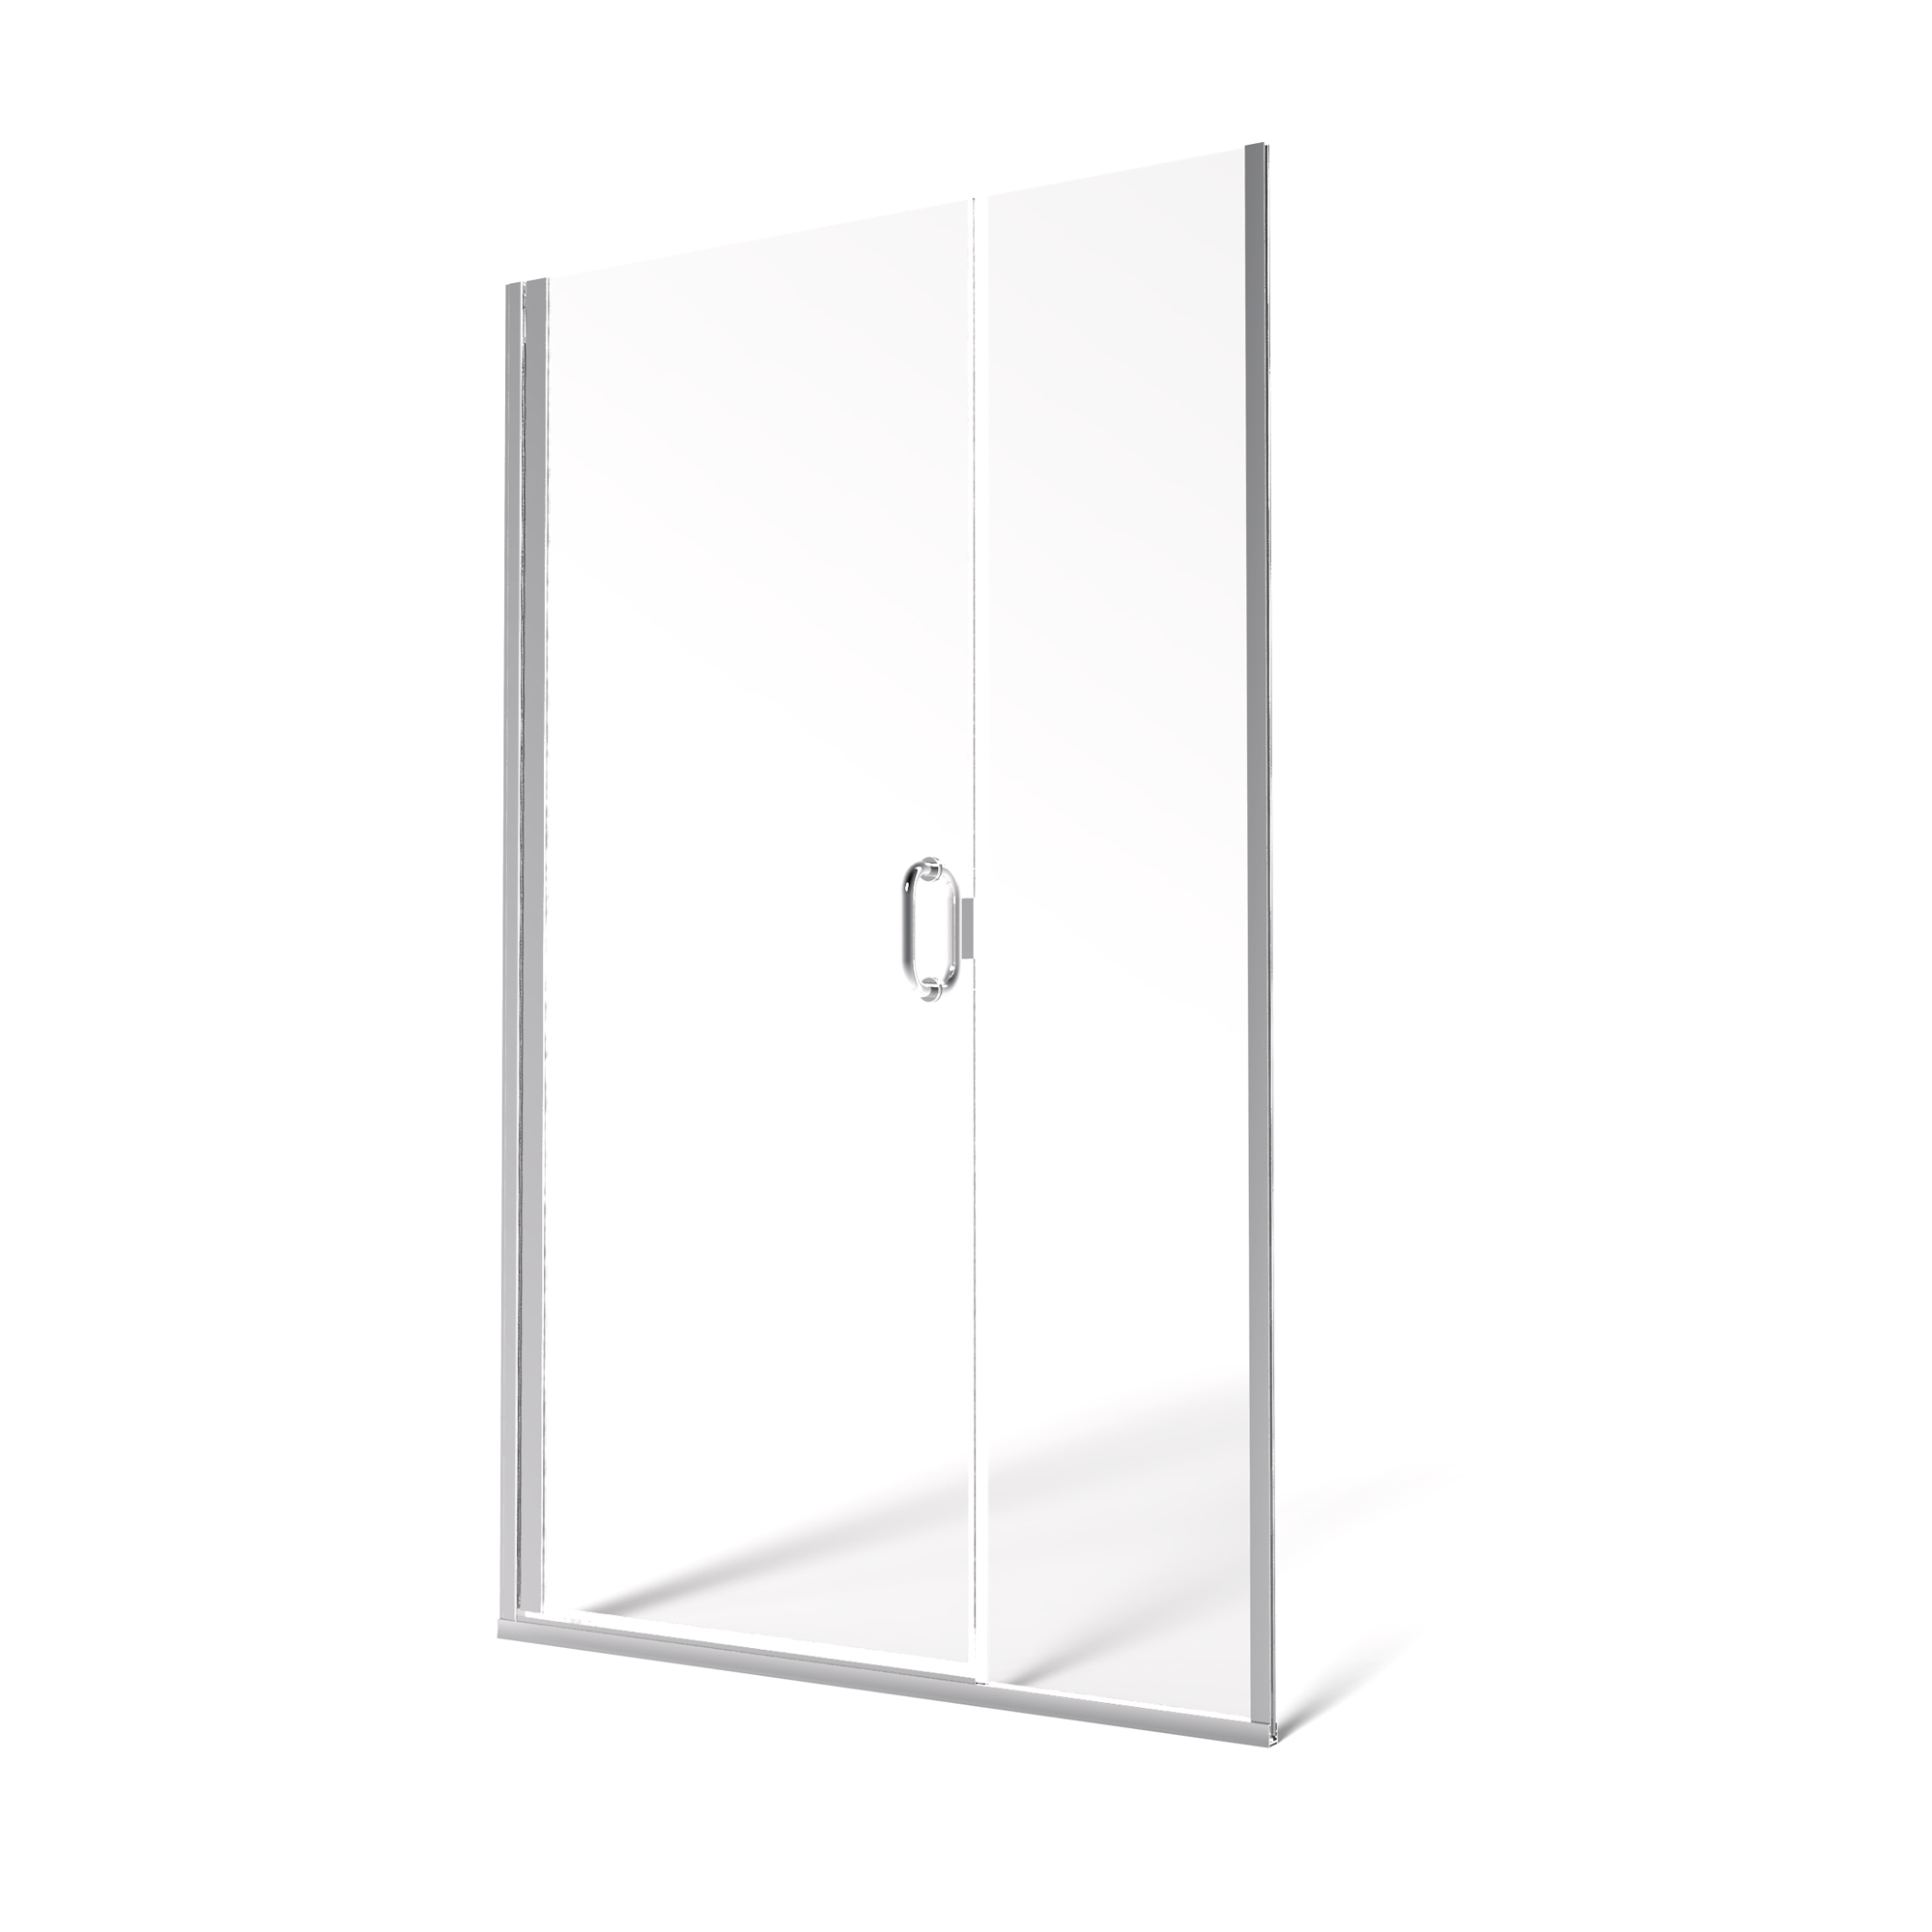 OEM Glass Shower Room Cabin For Bathroom